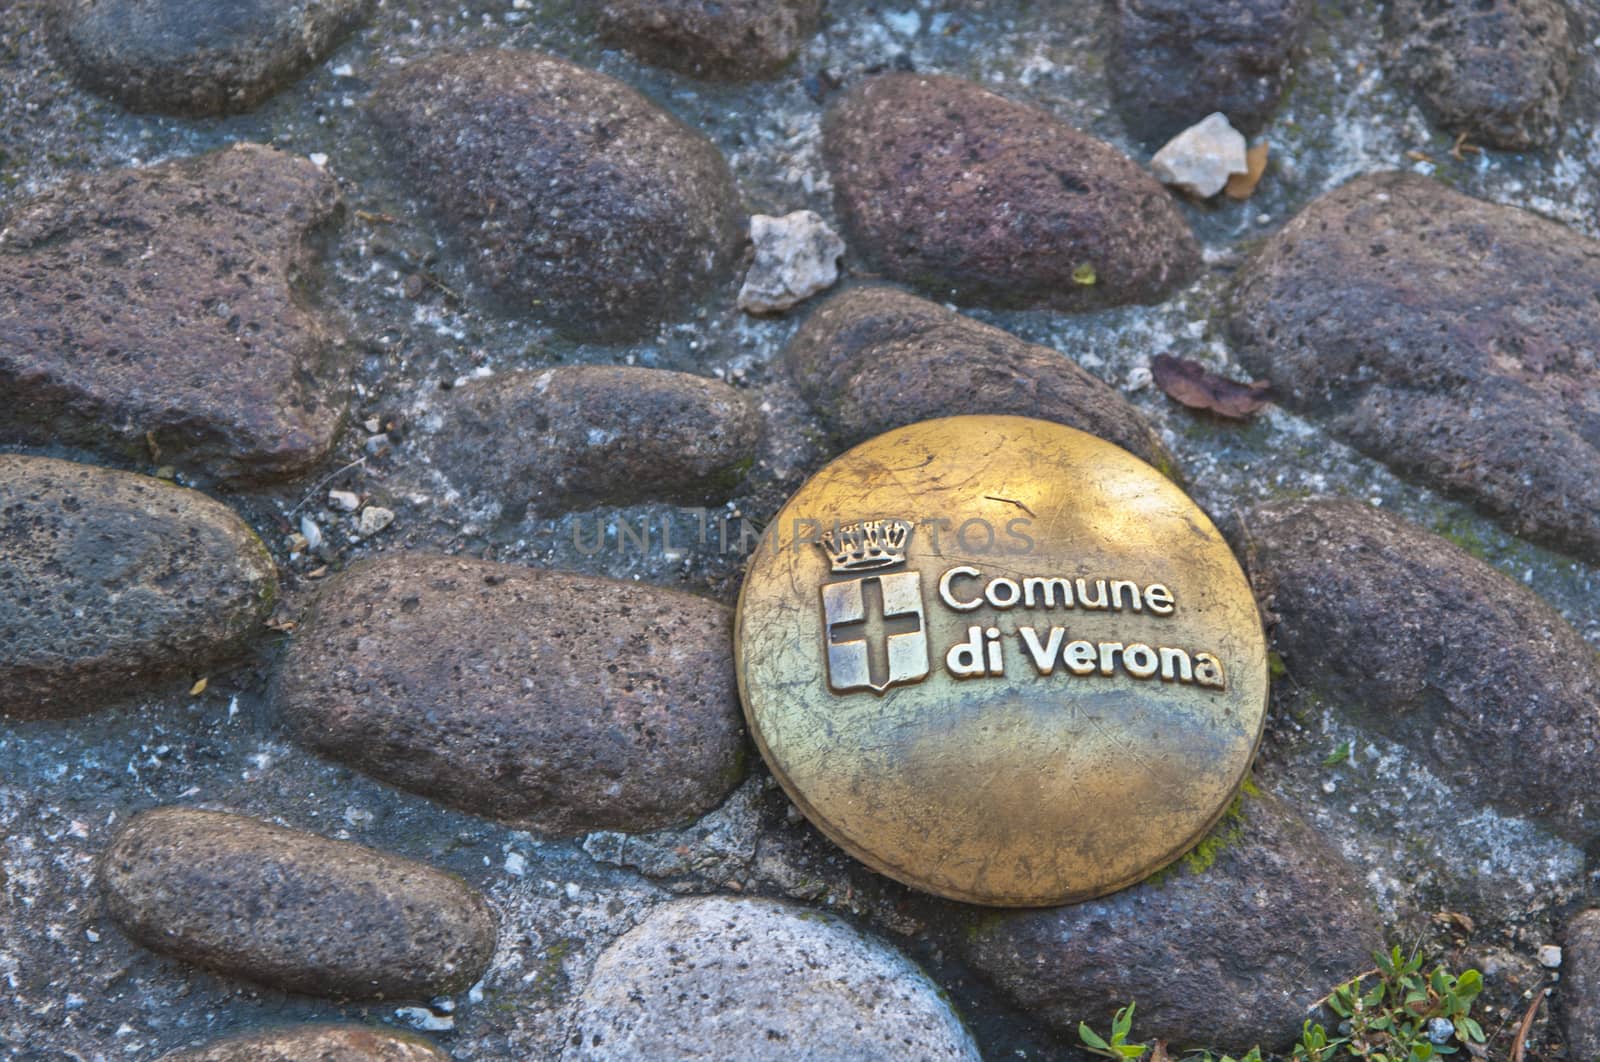 The pavement of Verona